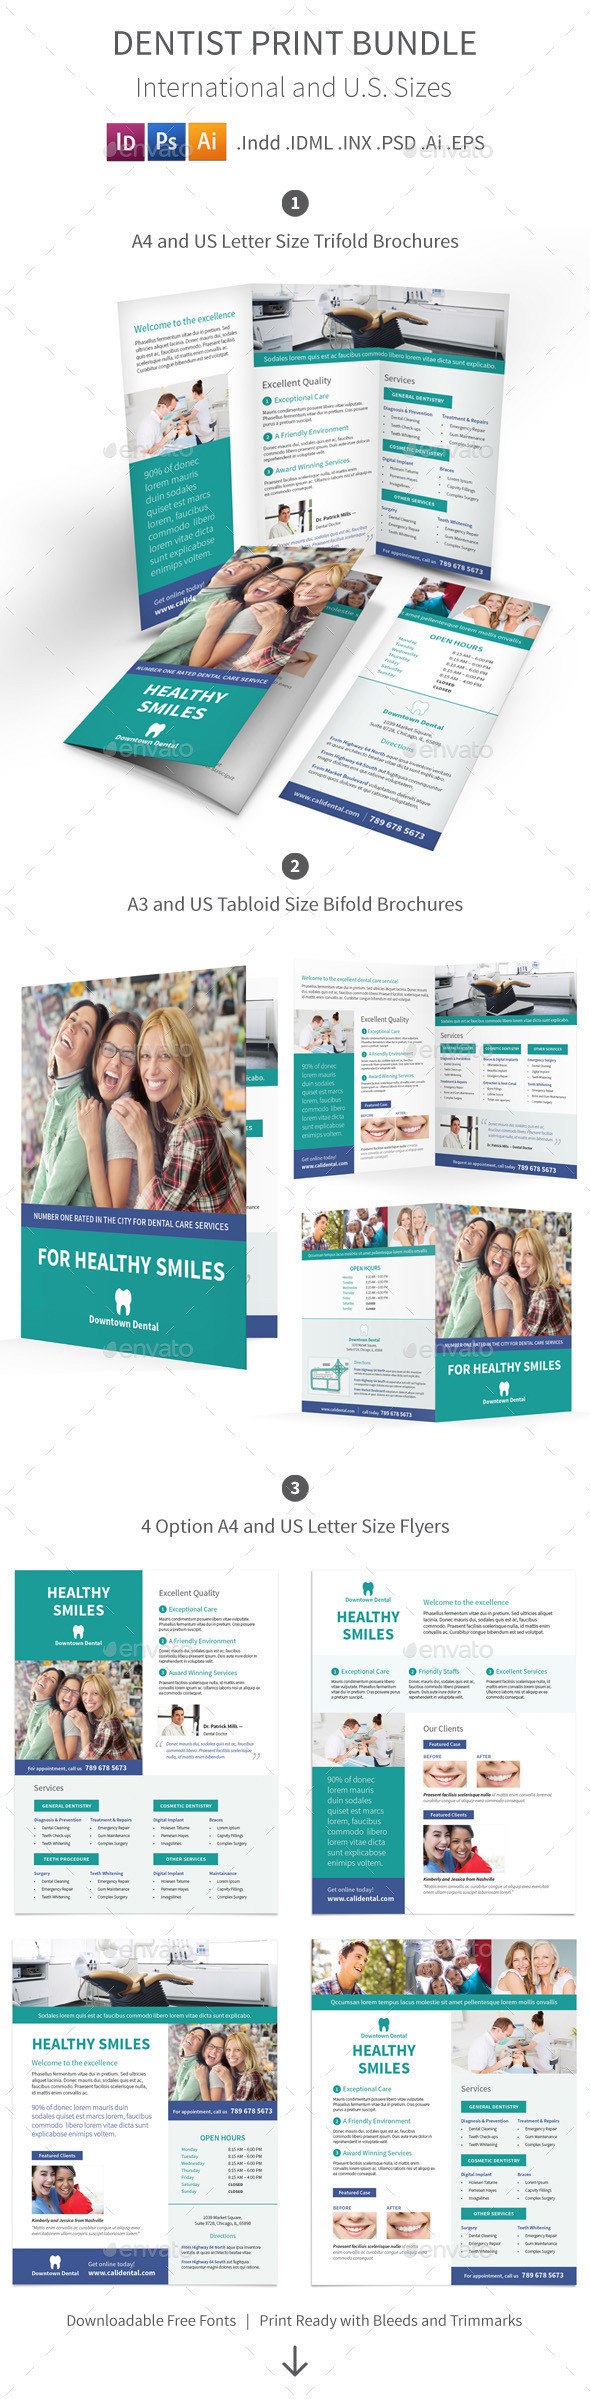 Dentist print 20bundle preview